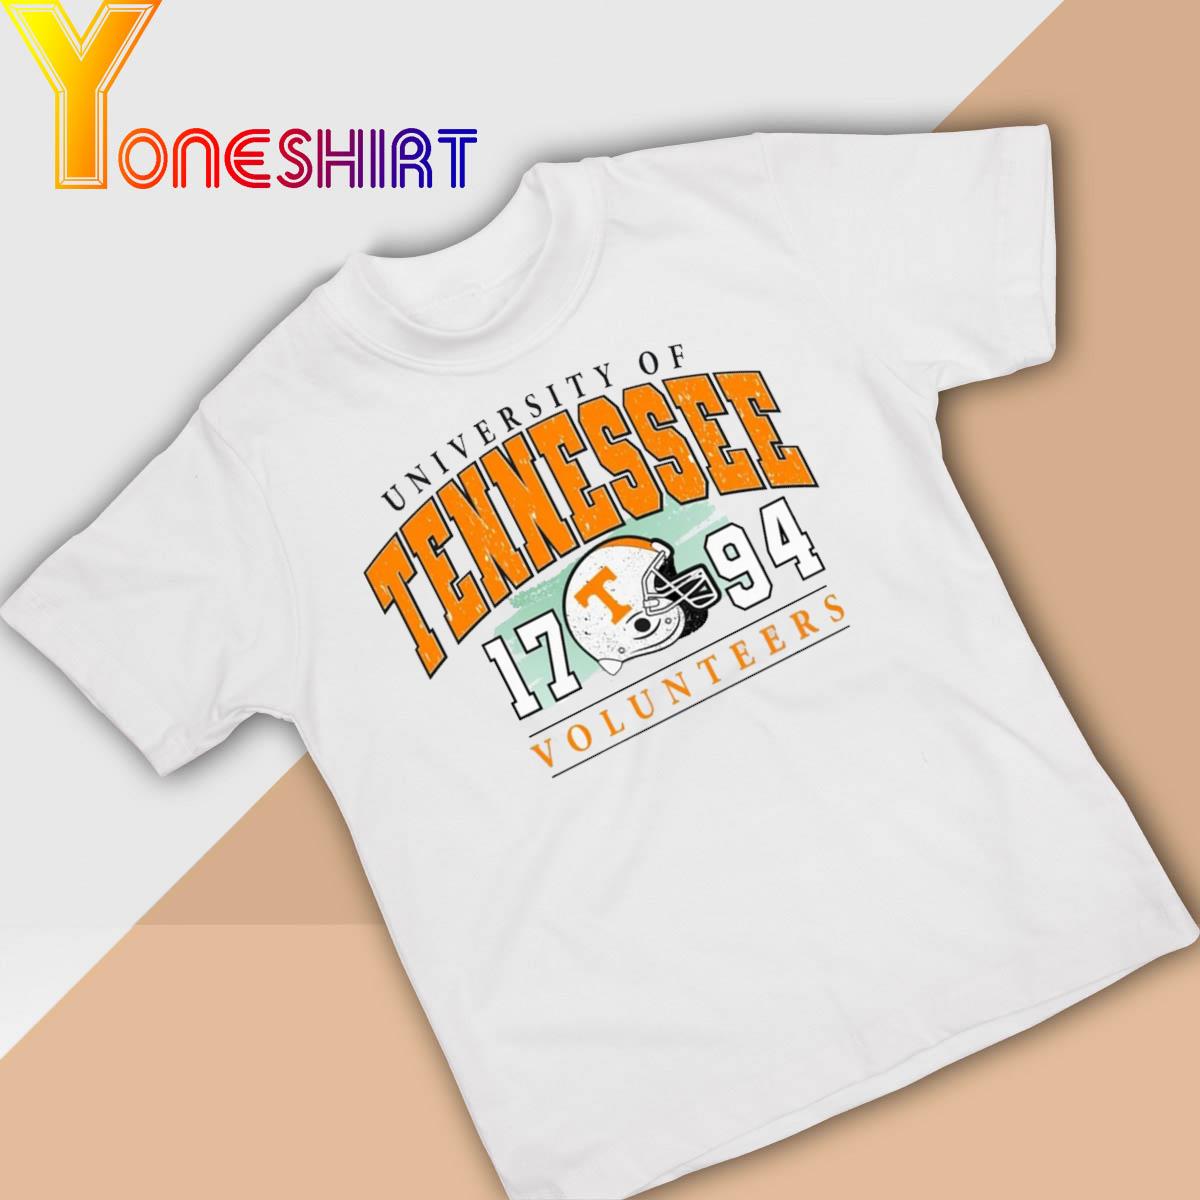 University of Tennessee Volunteers Football 1794 shirt